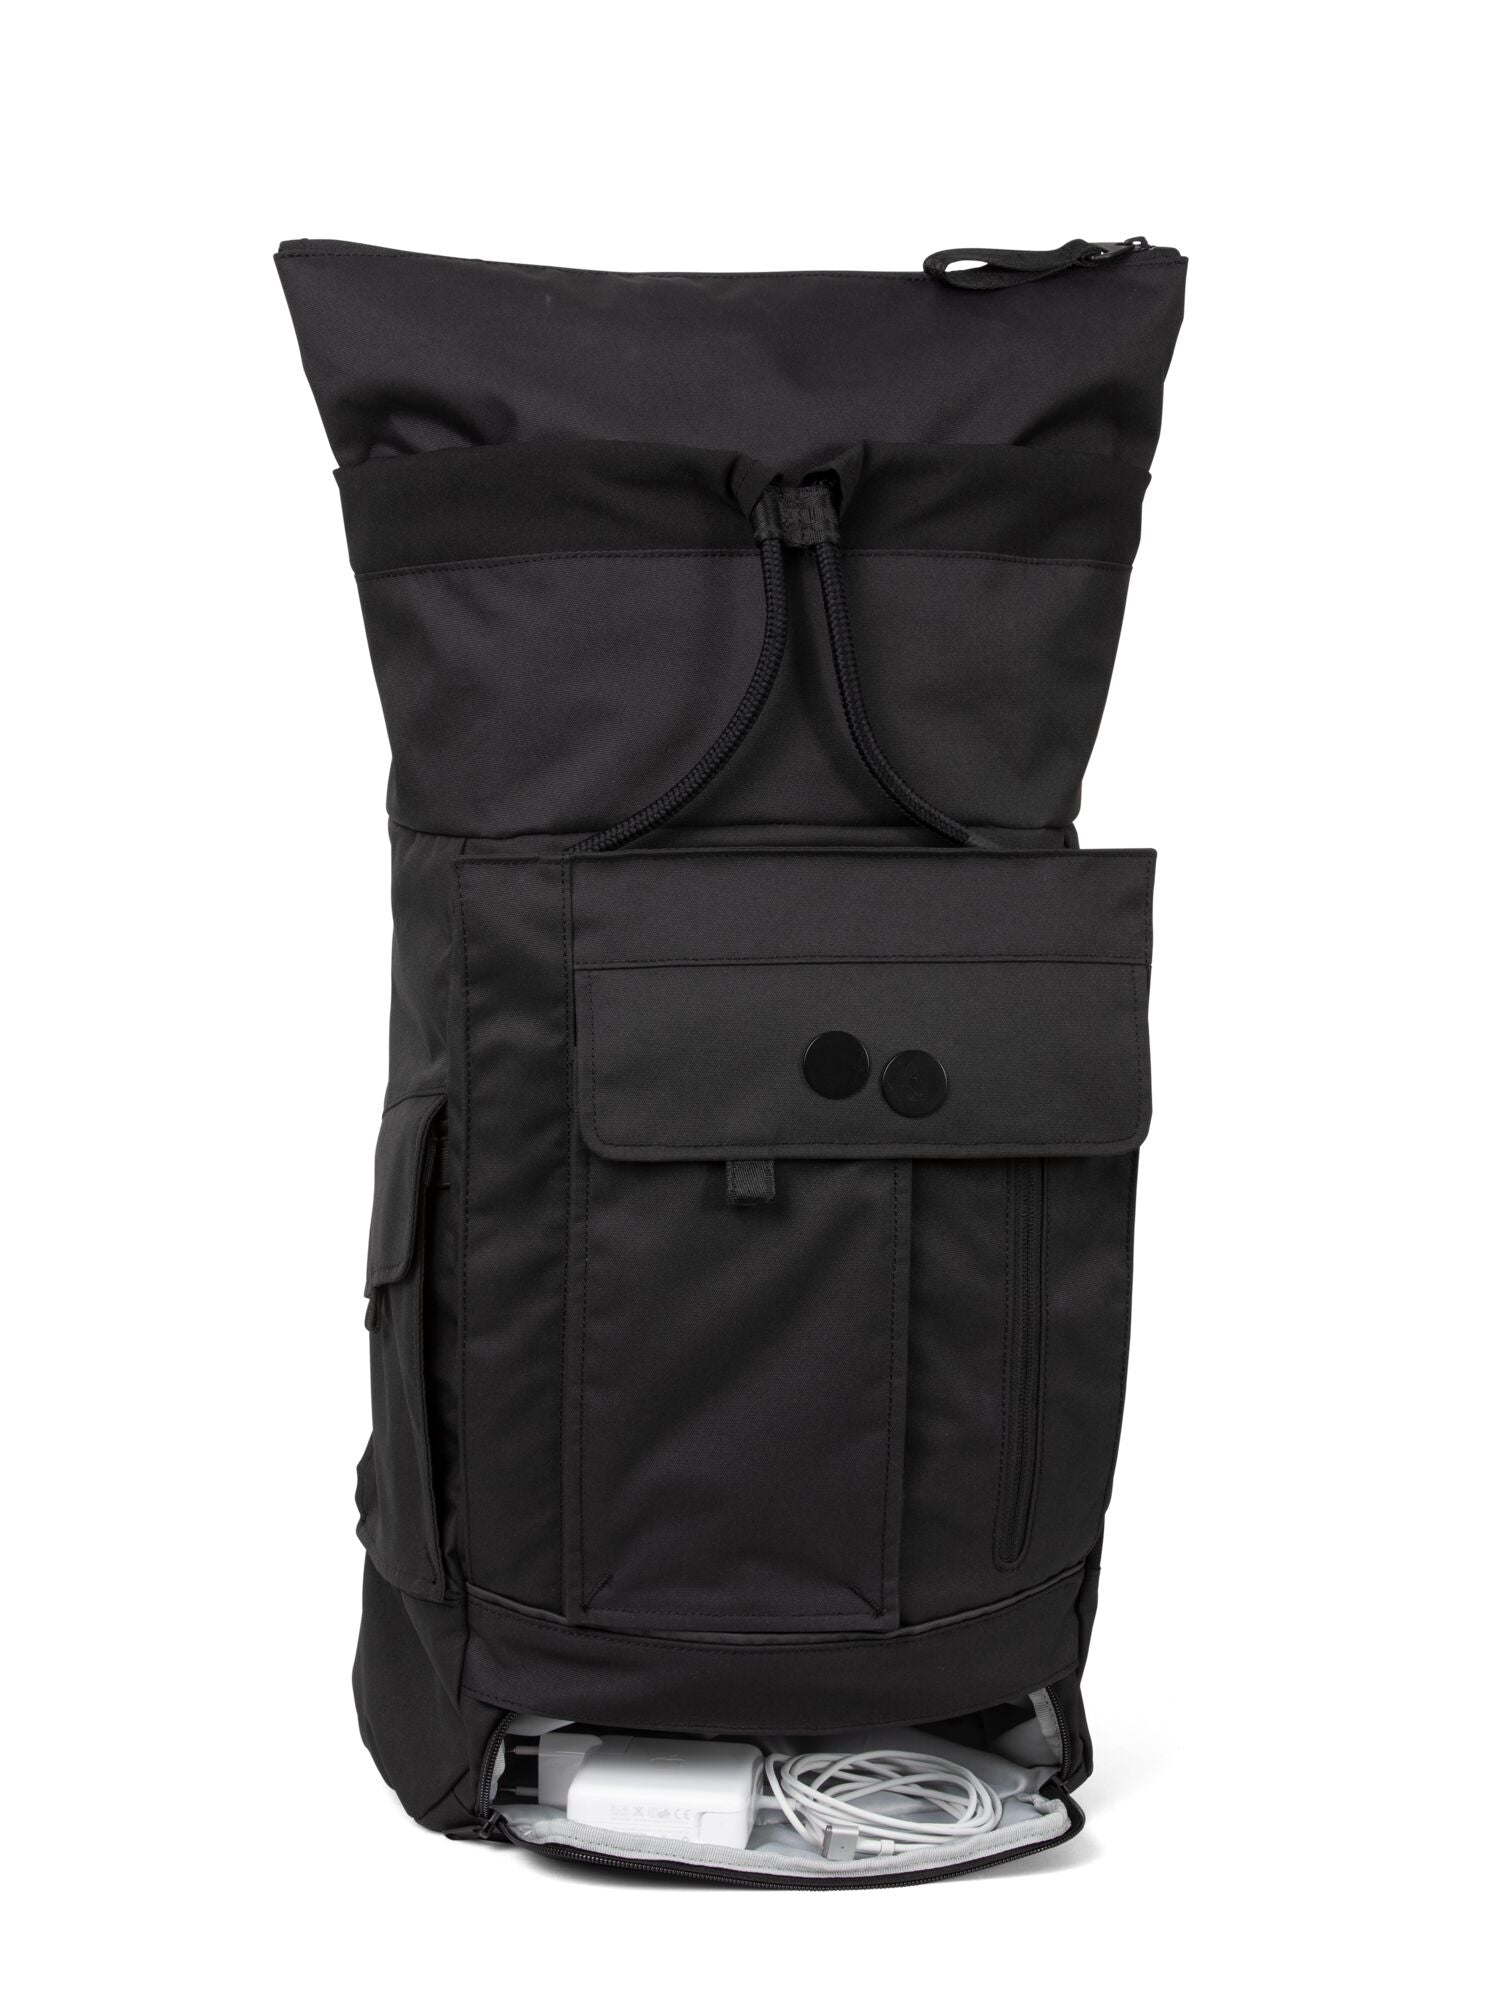 Blok Medium Backpack Construct Black Größe: one-size Farbe: black